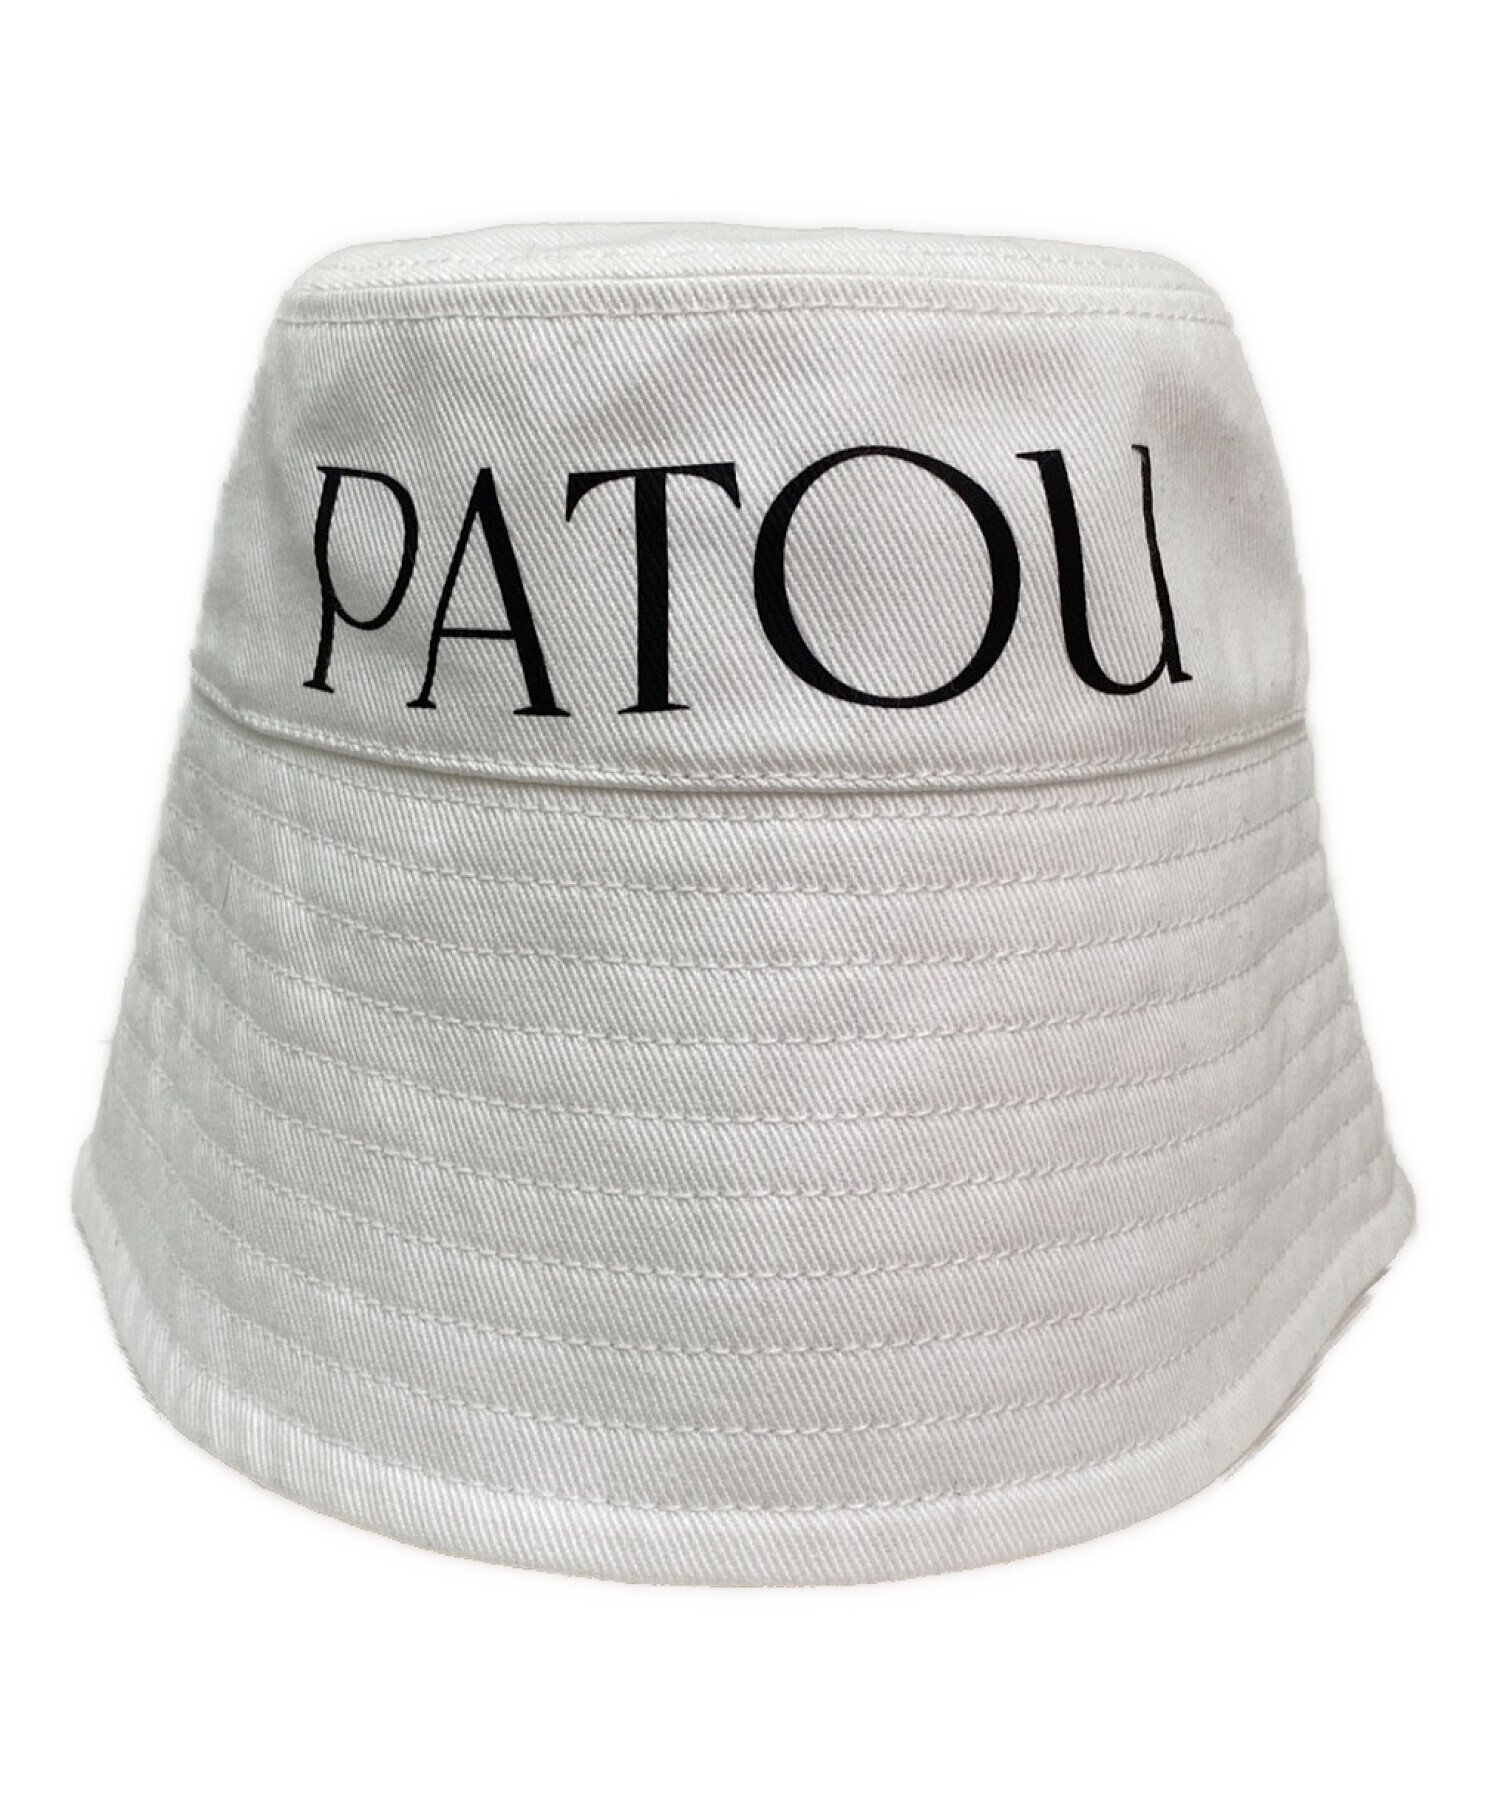 patou (パトゥ) オーガニックコットンバケットハット ホワイト サイズ:M-L